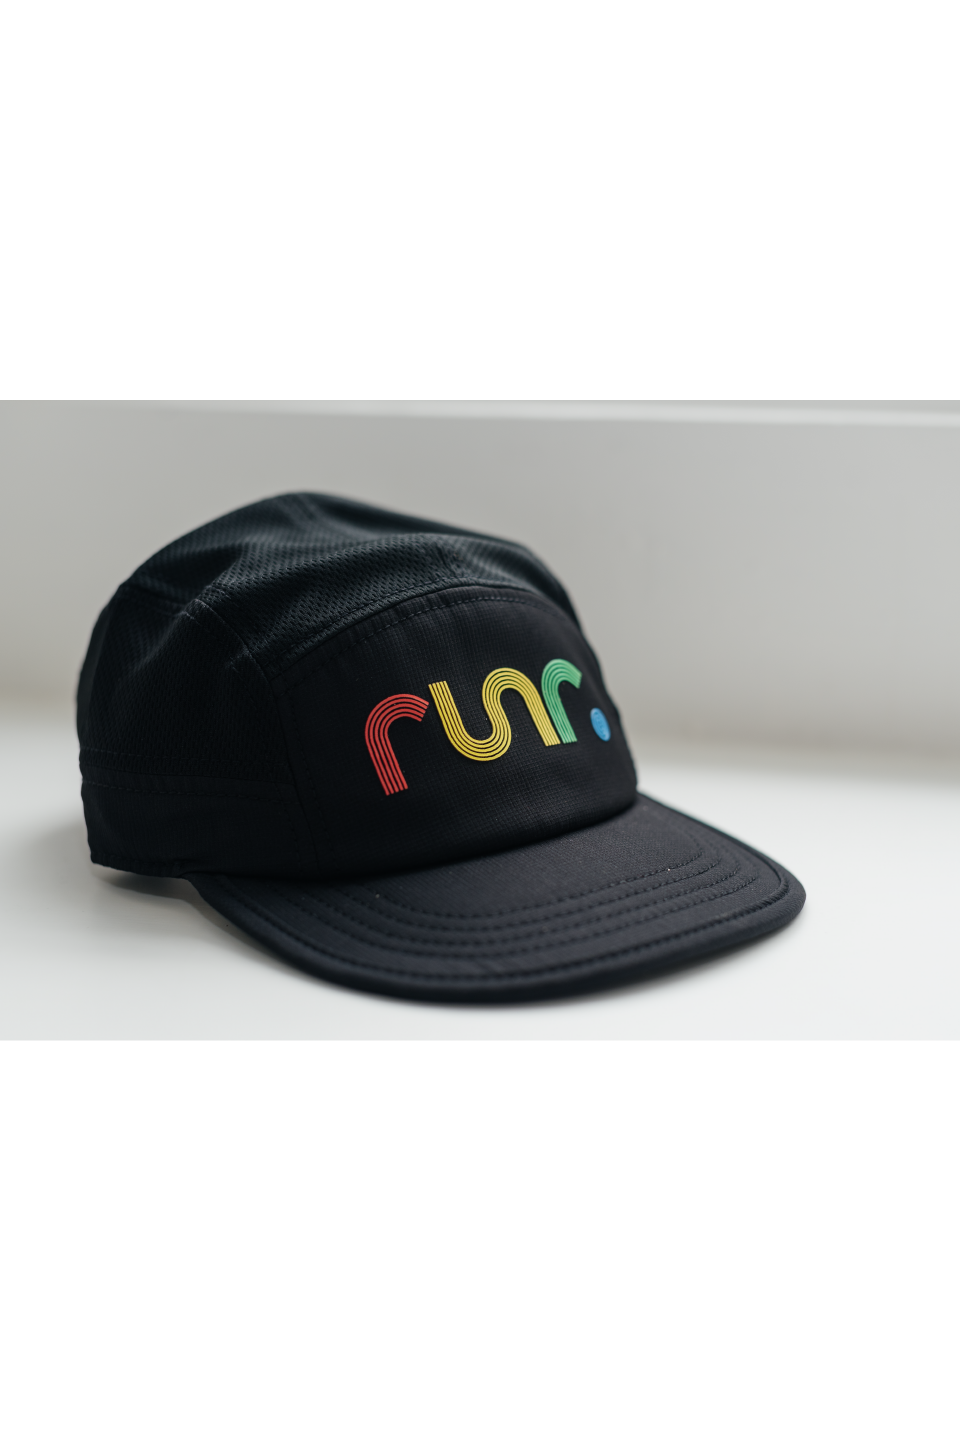 80's Runr Technical Running Hat